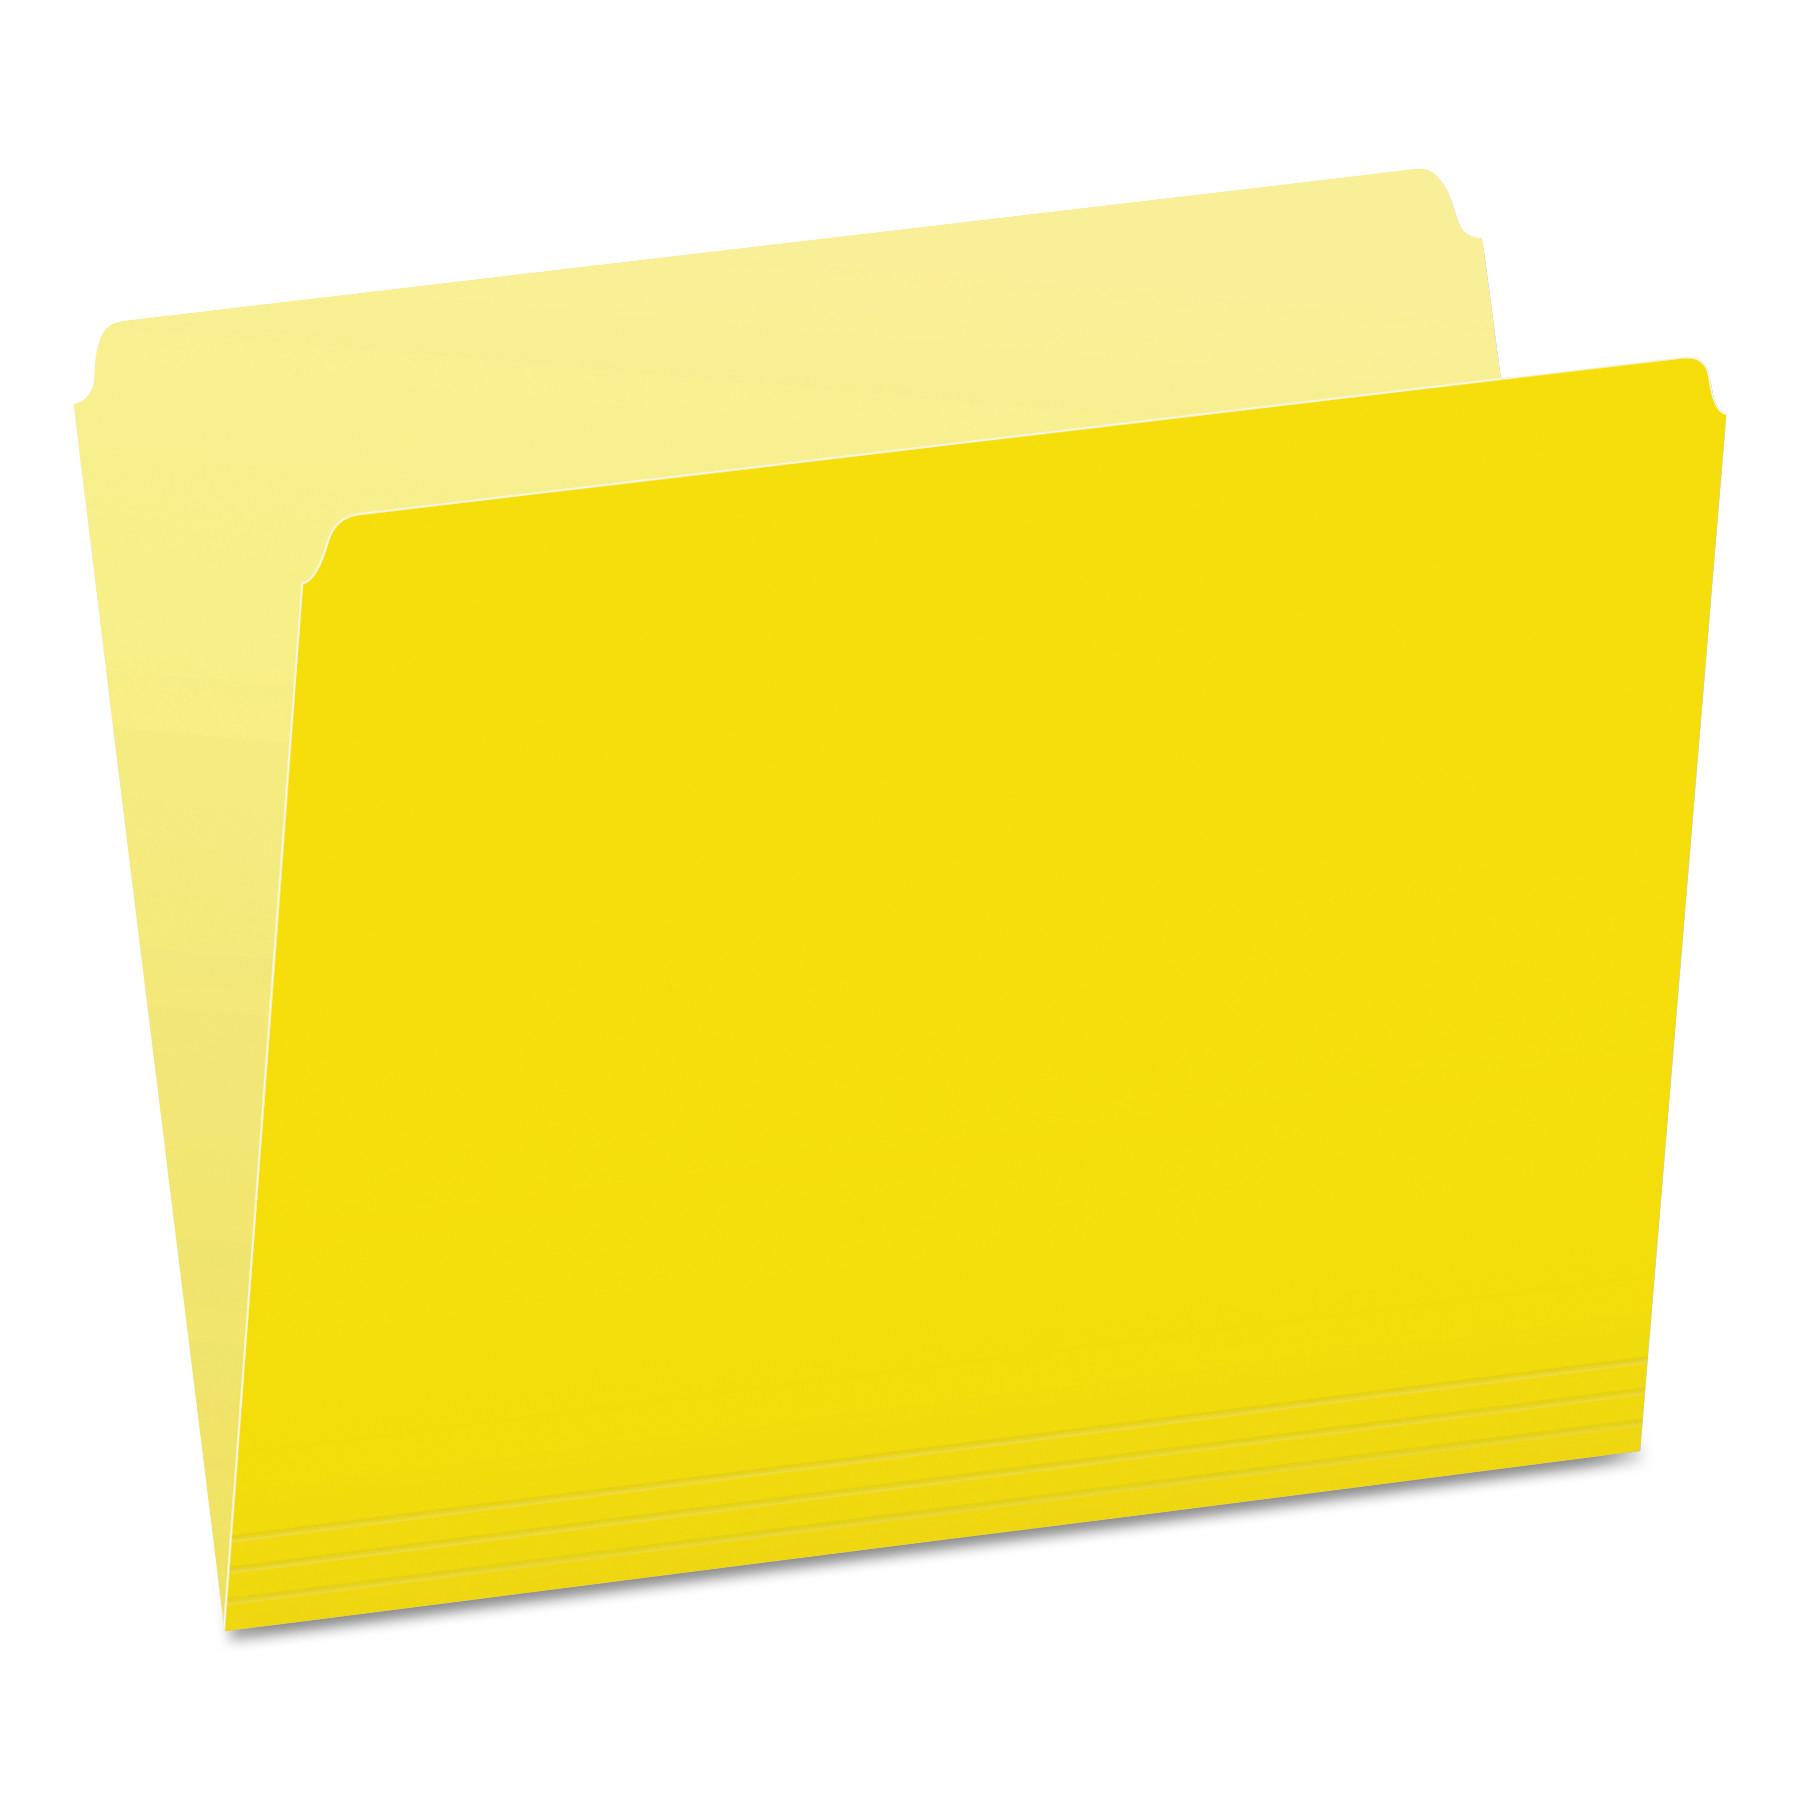  Pendaflex 152 YEL Colored File Folders, Straight Tab, Letter Size, Yellowith Light Yellow, 100/Box (PFX152YEL) 